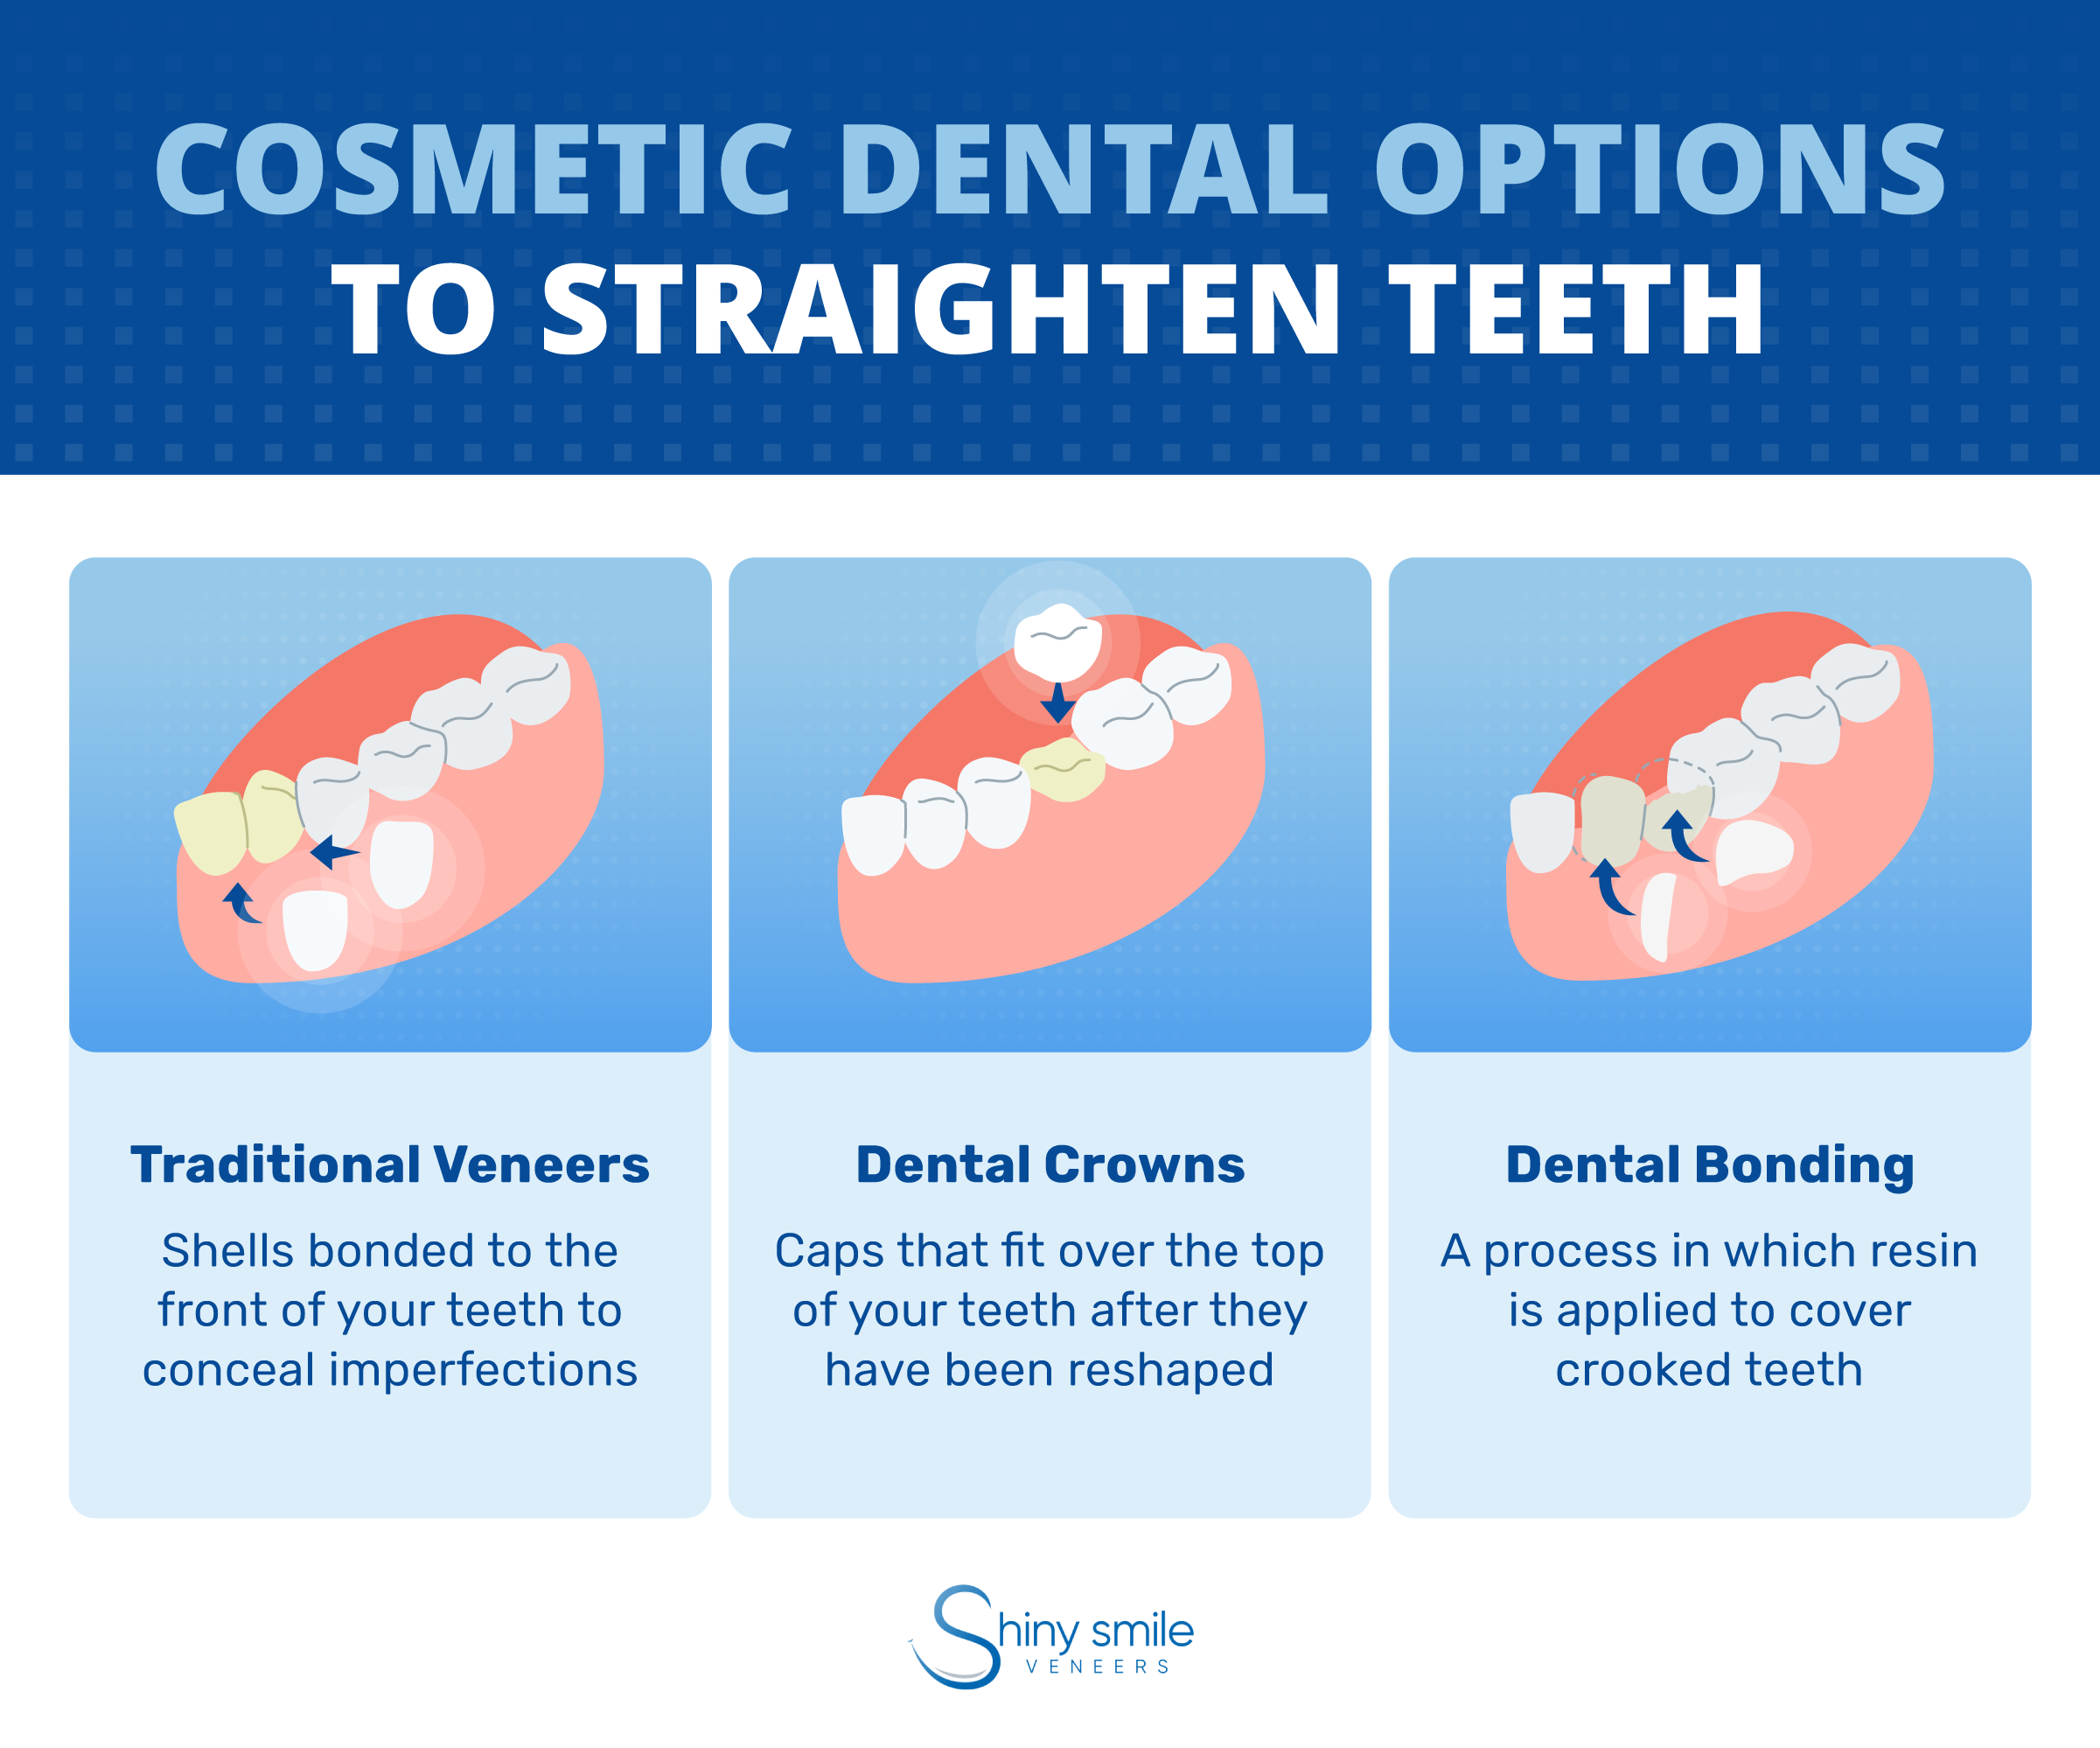 Cosmetic dental options to straighten teeth